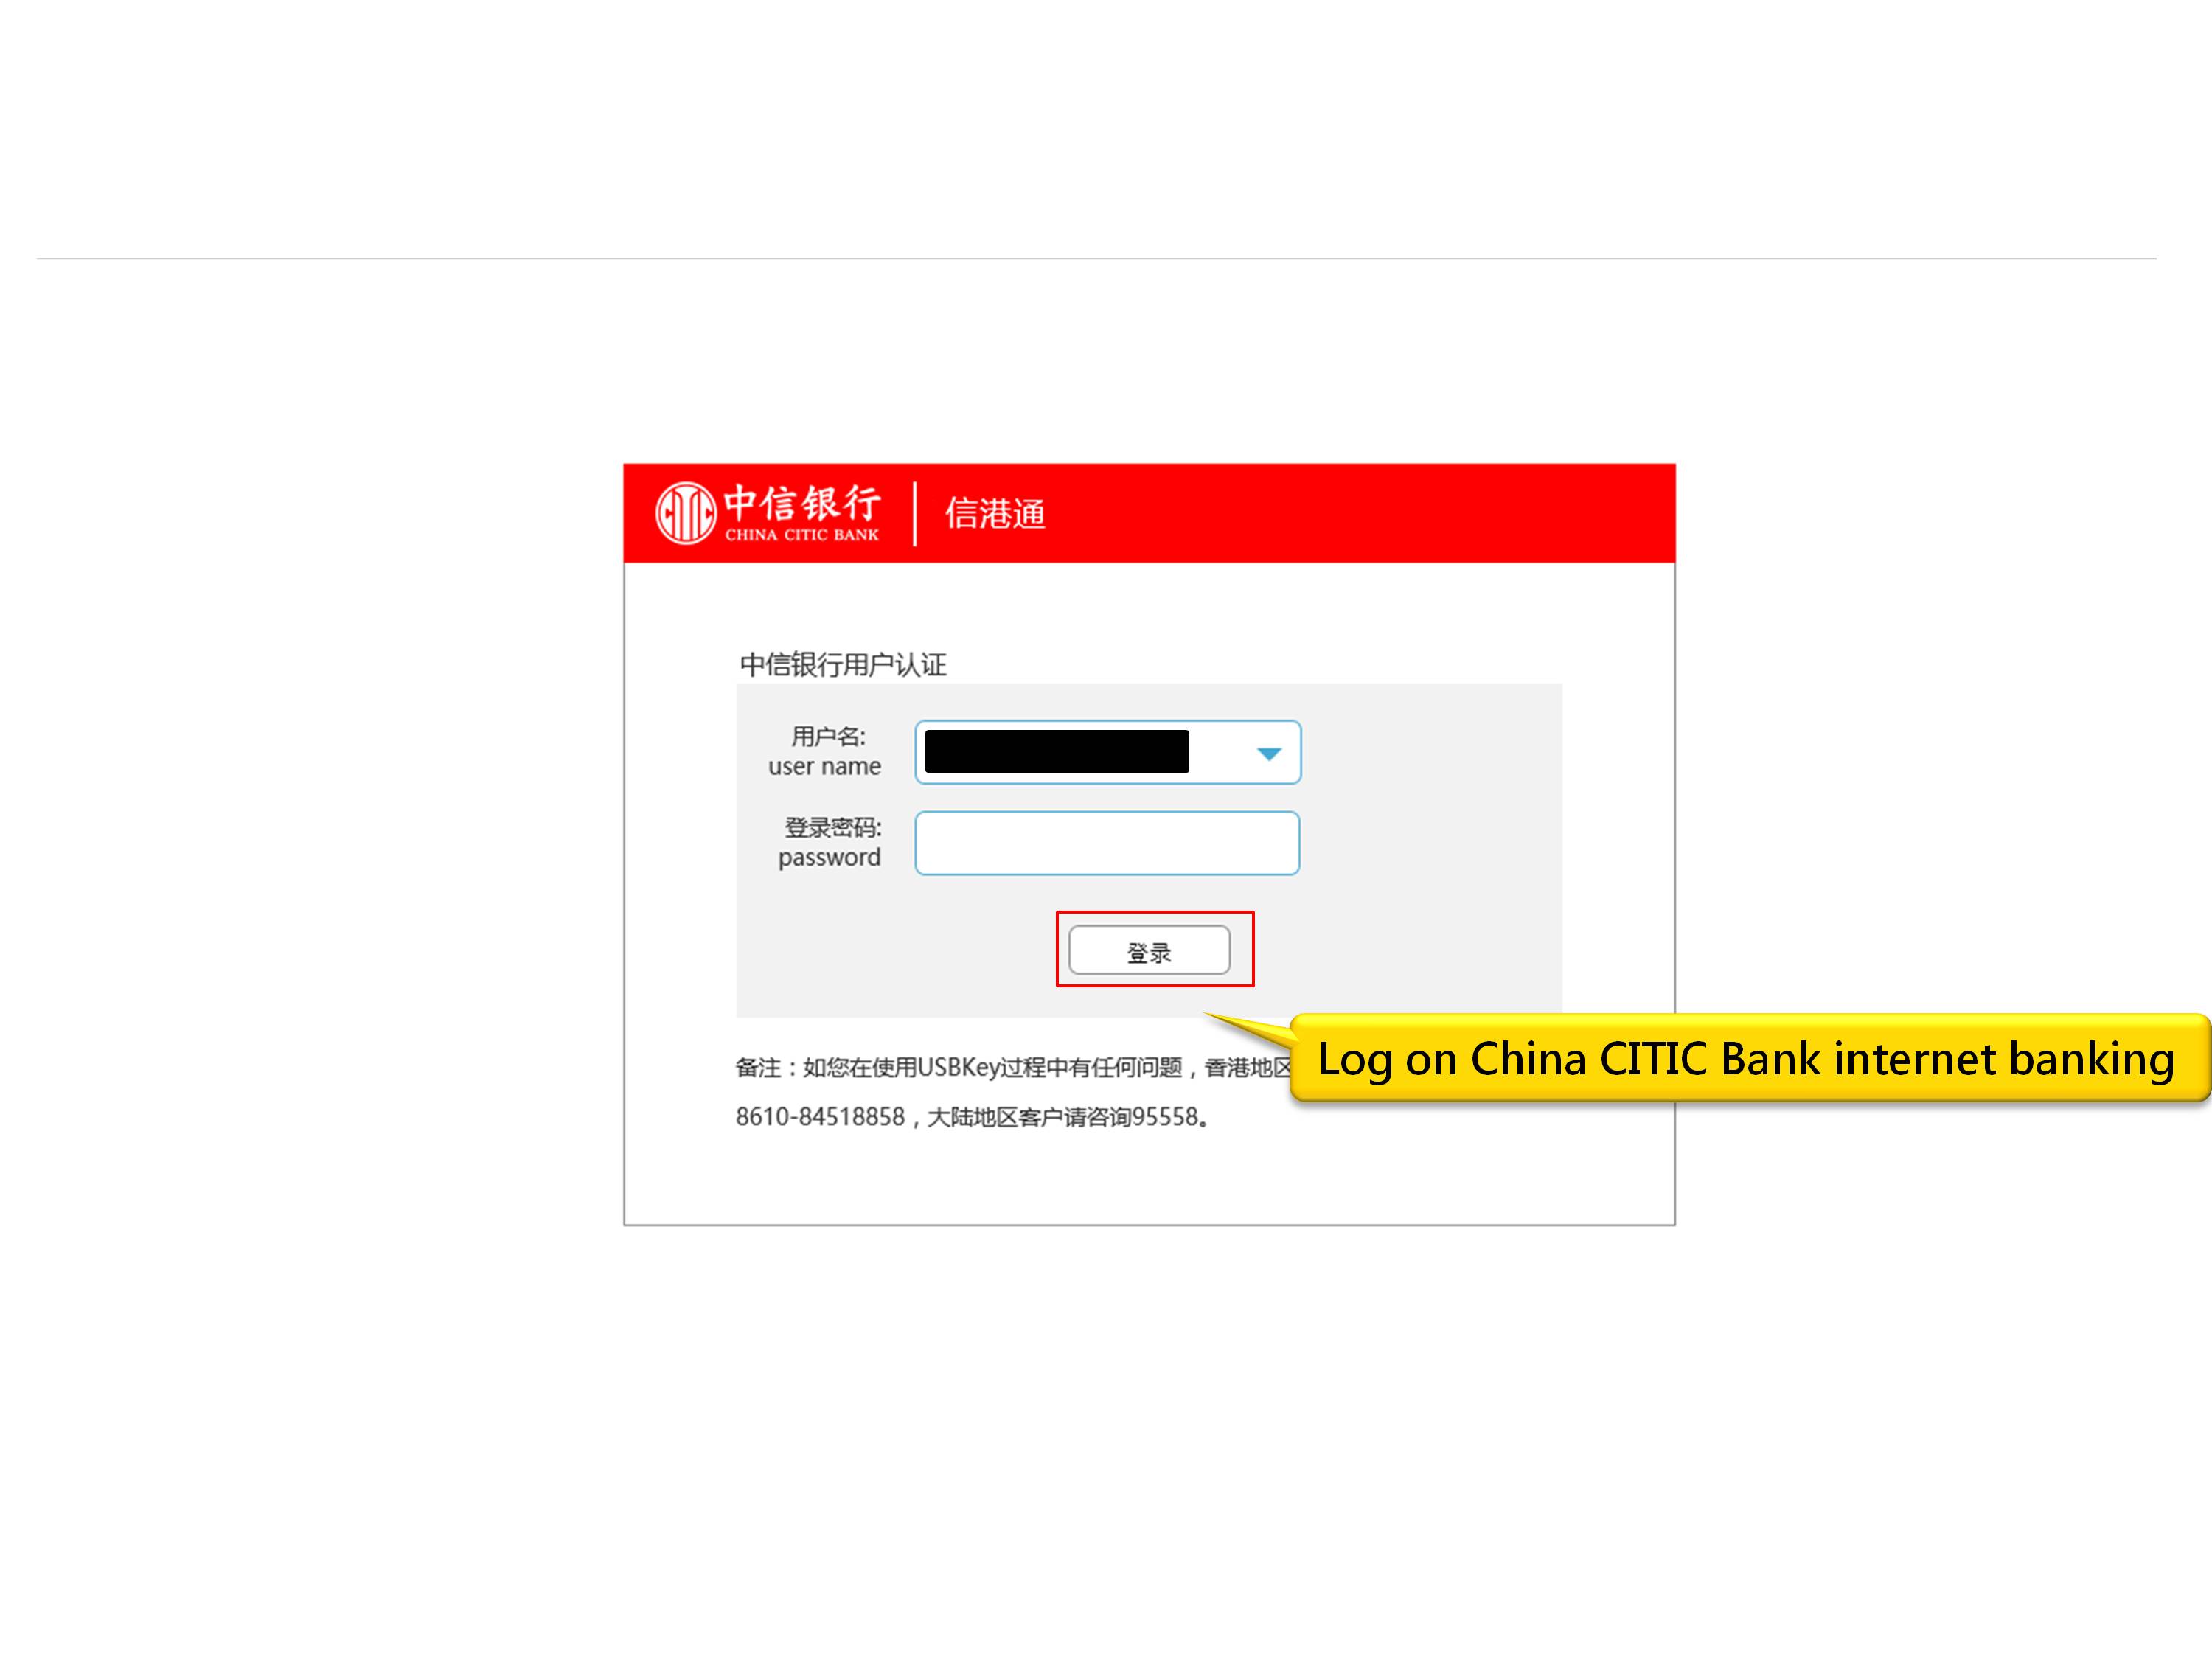 Log on China CITIC Bank internet banking